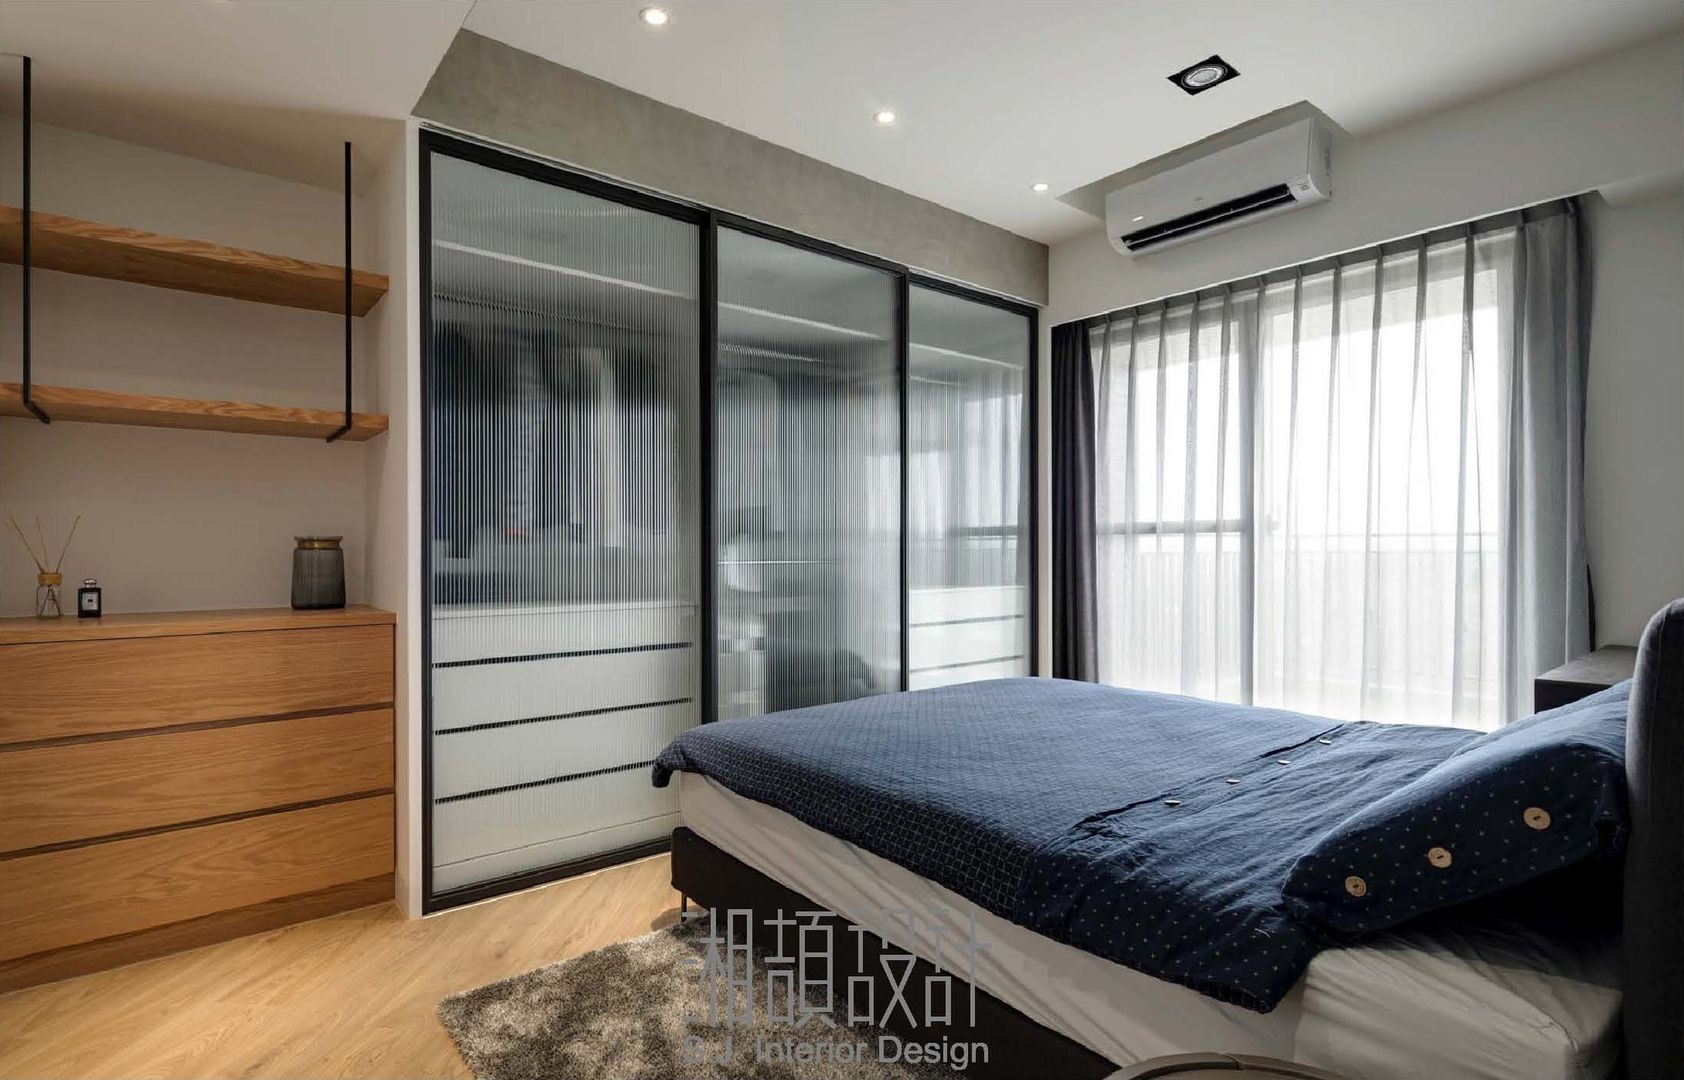 工業風粗曠氣息的主臥室 湘頡設計 Industrial style bedroom